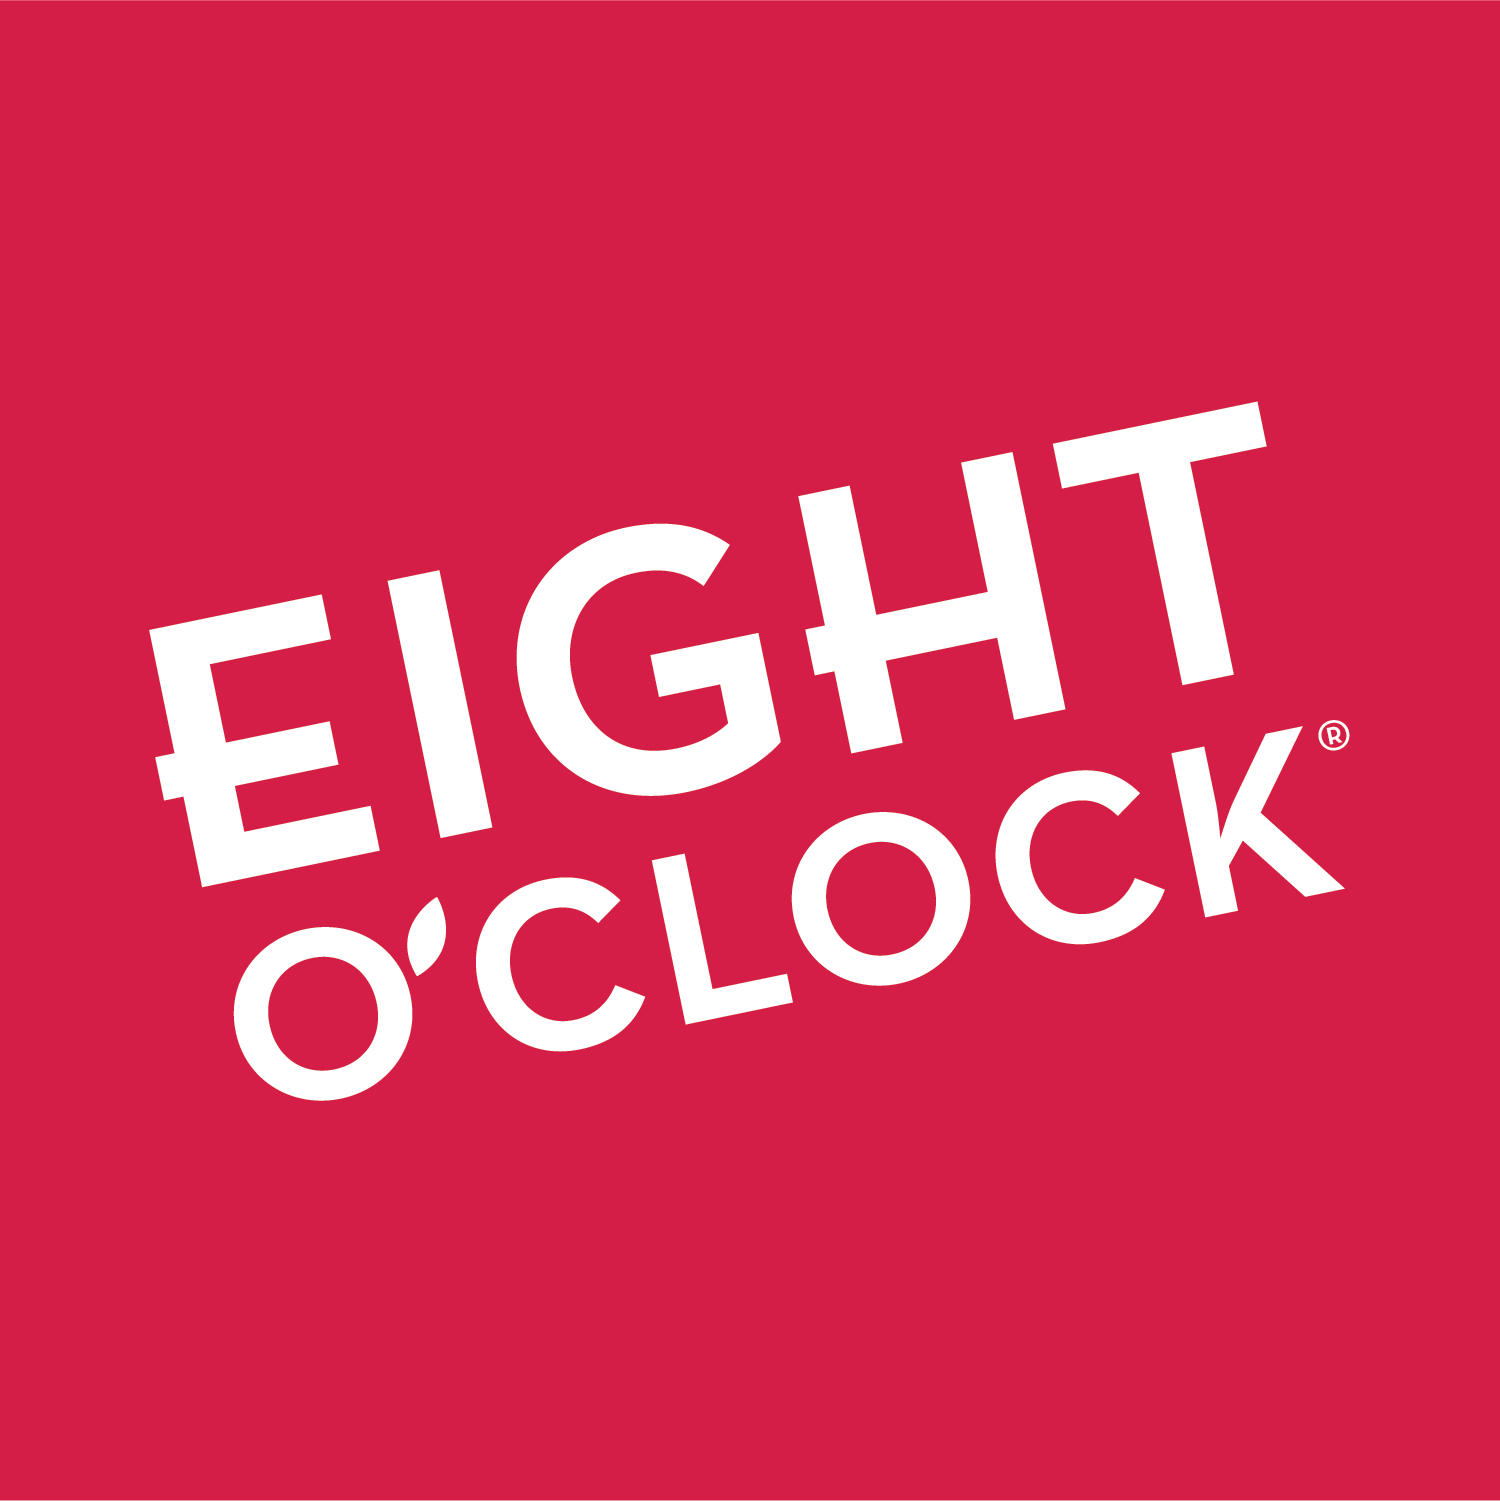 Brand: Eight O' Clock